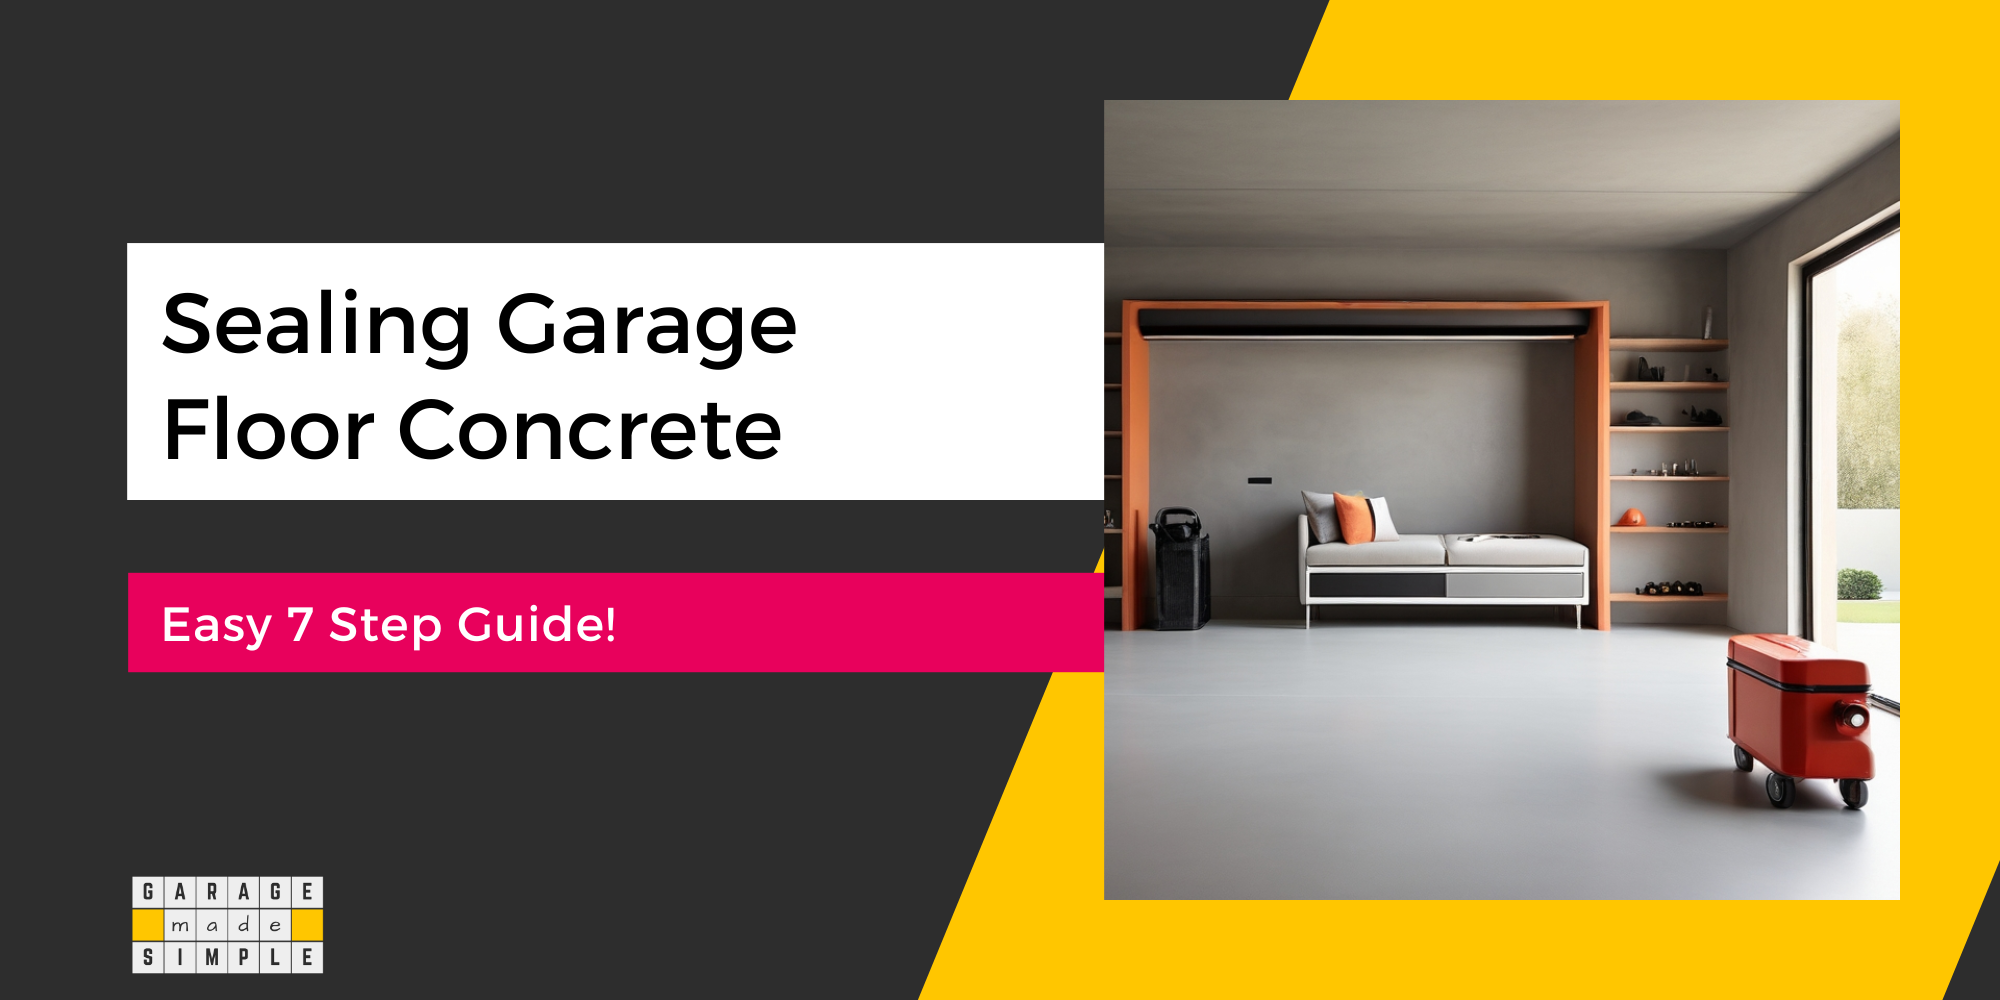 Sealing Garage Floor Concrete: (An Easy 7 Step Guide!)